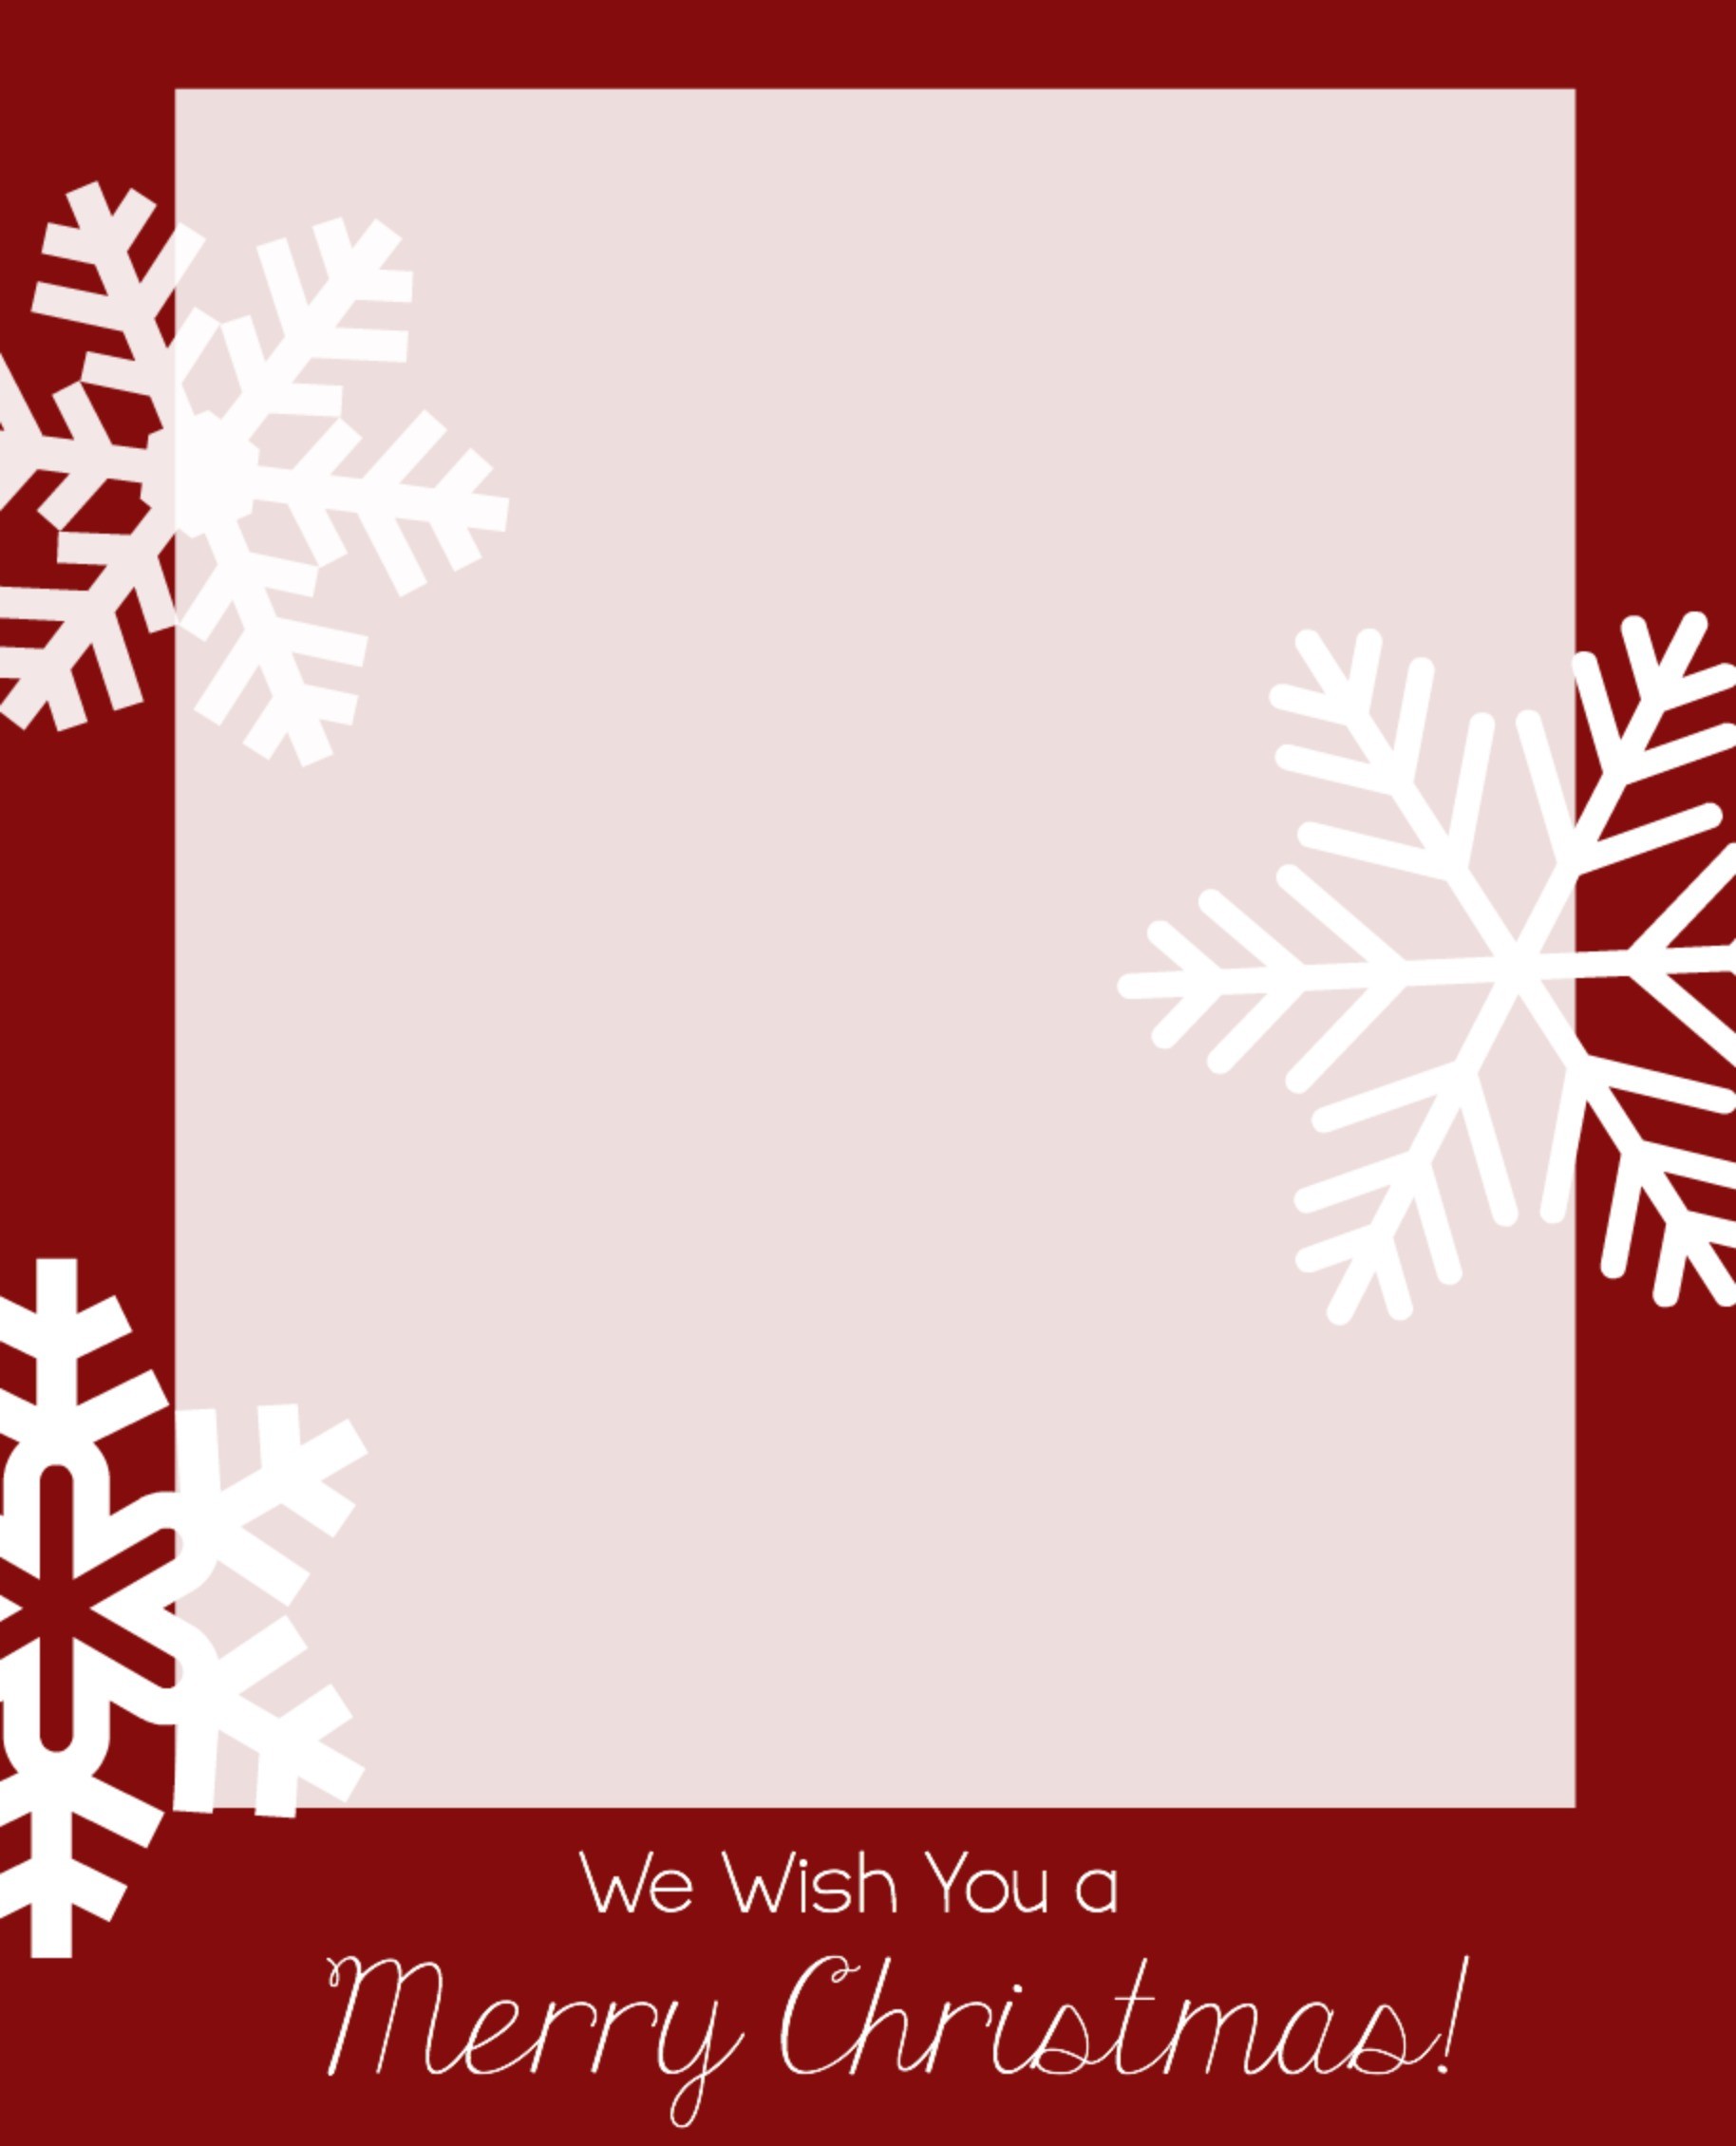 Christmas Card Word Template Ukran Agdiffusion Com Free Photo Templates For